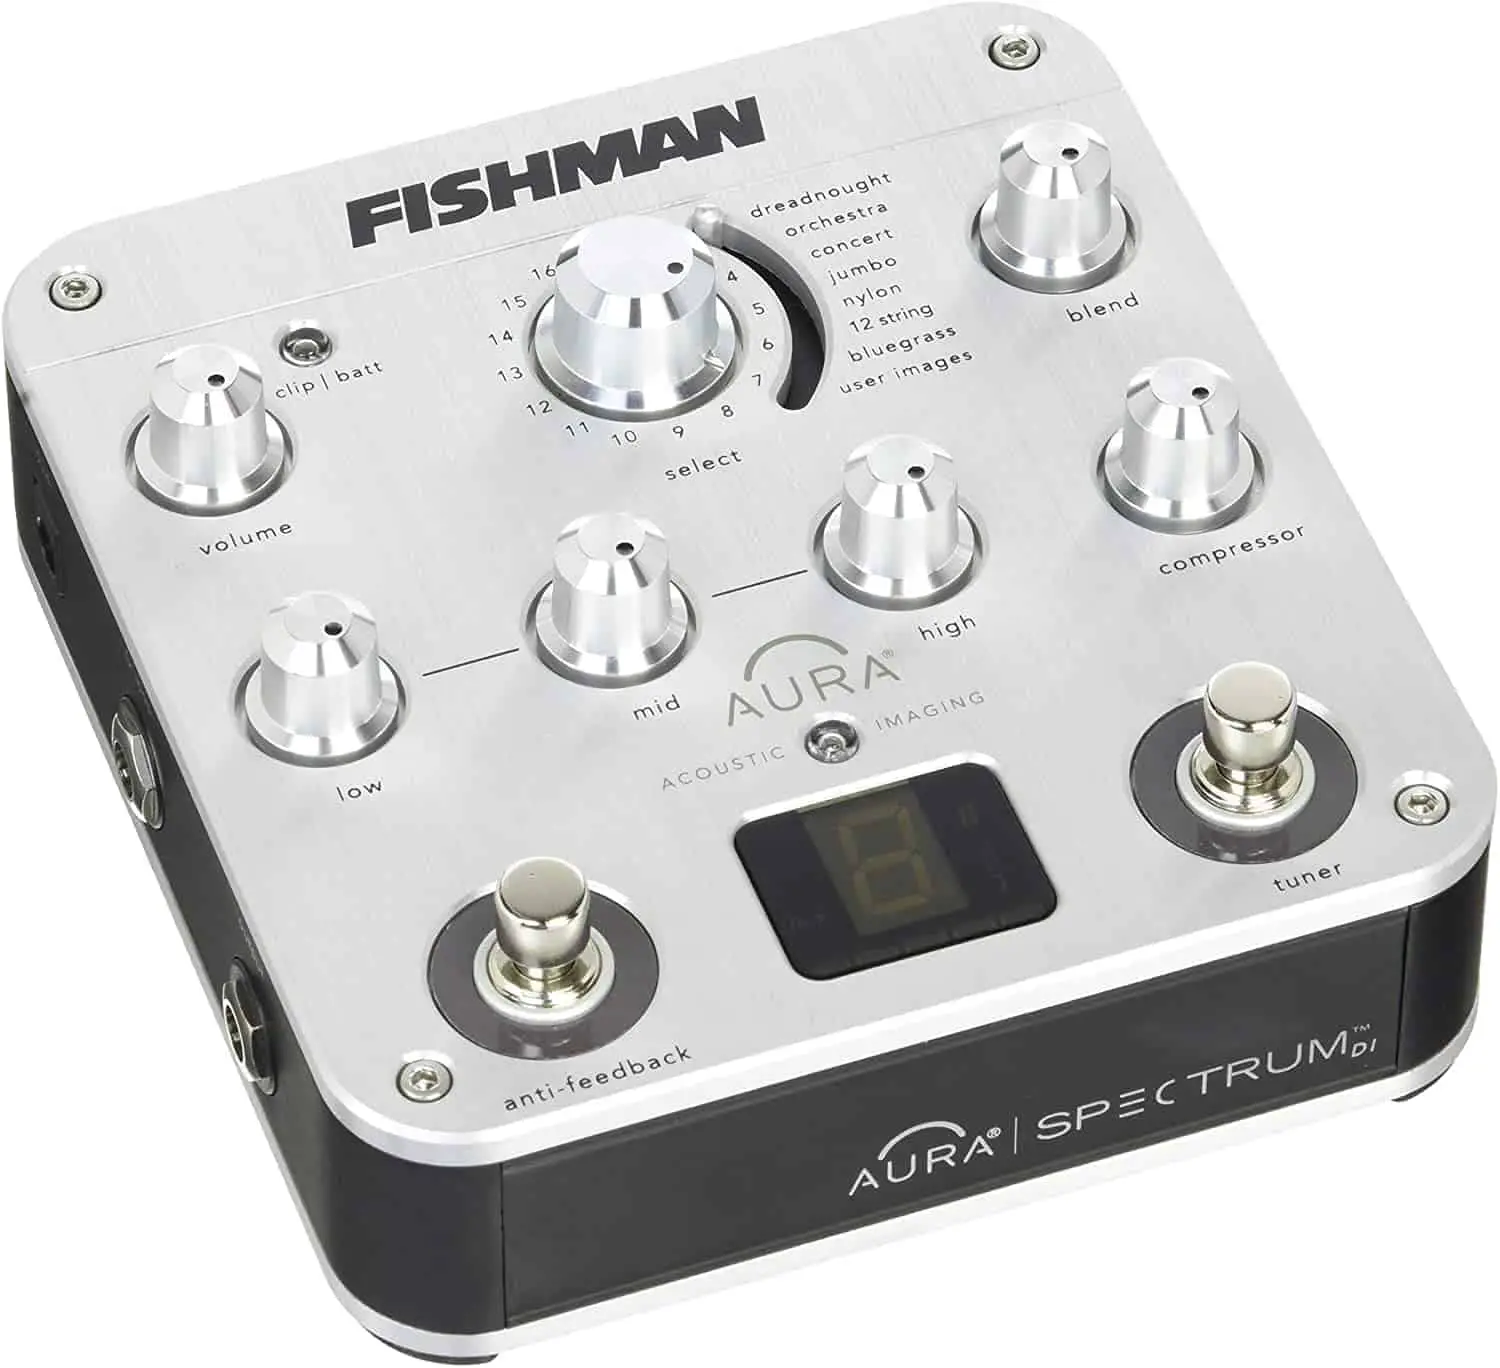 Najbolja akustična pedala pretpojačala: Fishman Aura Spectrum DI